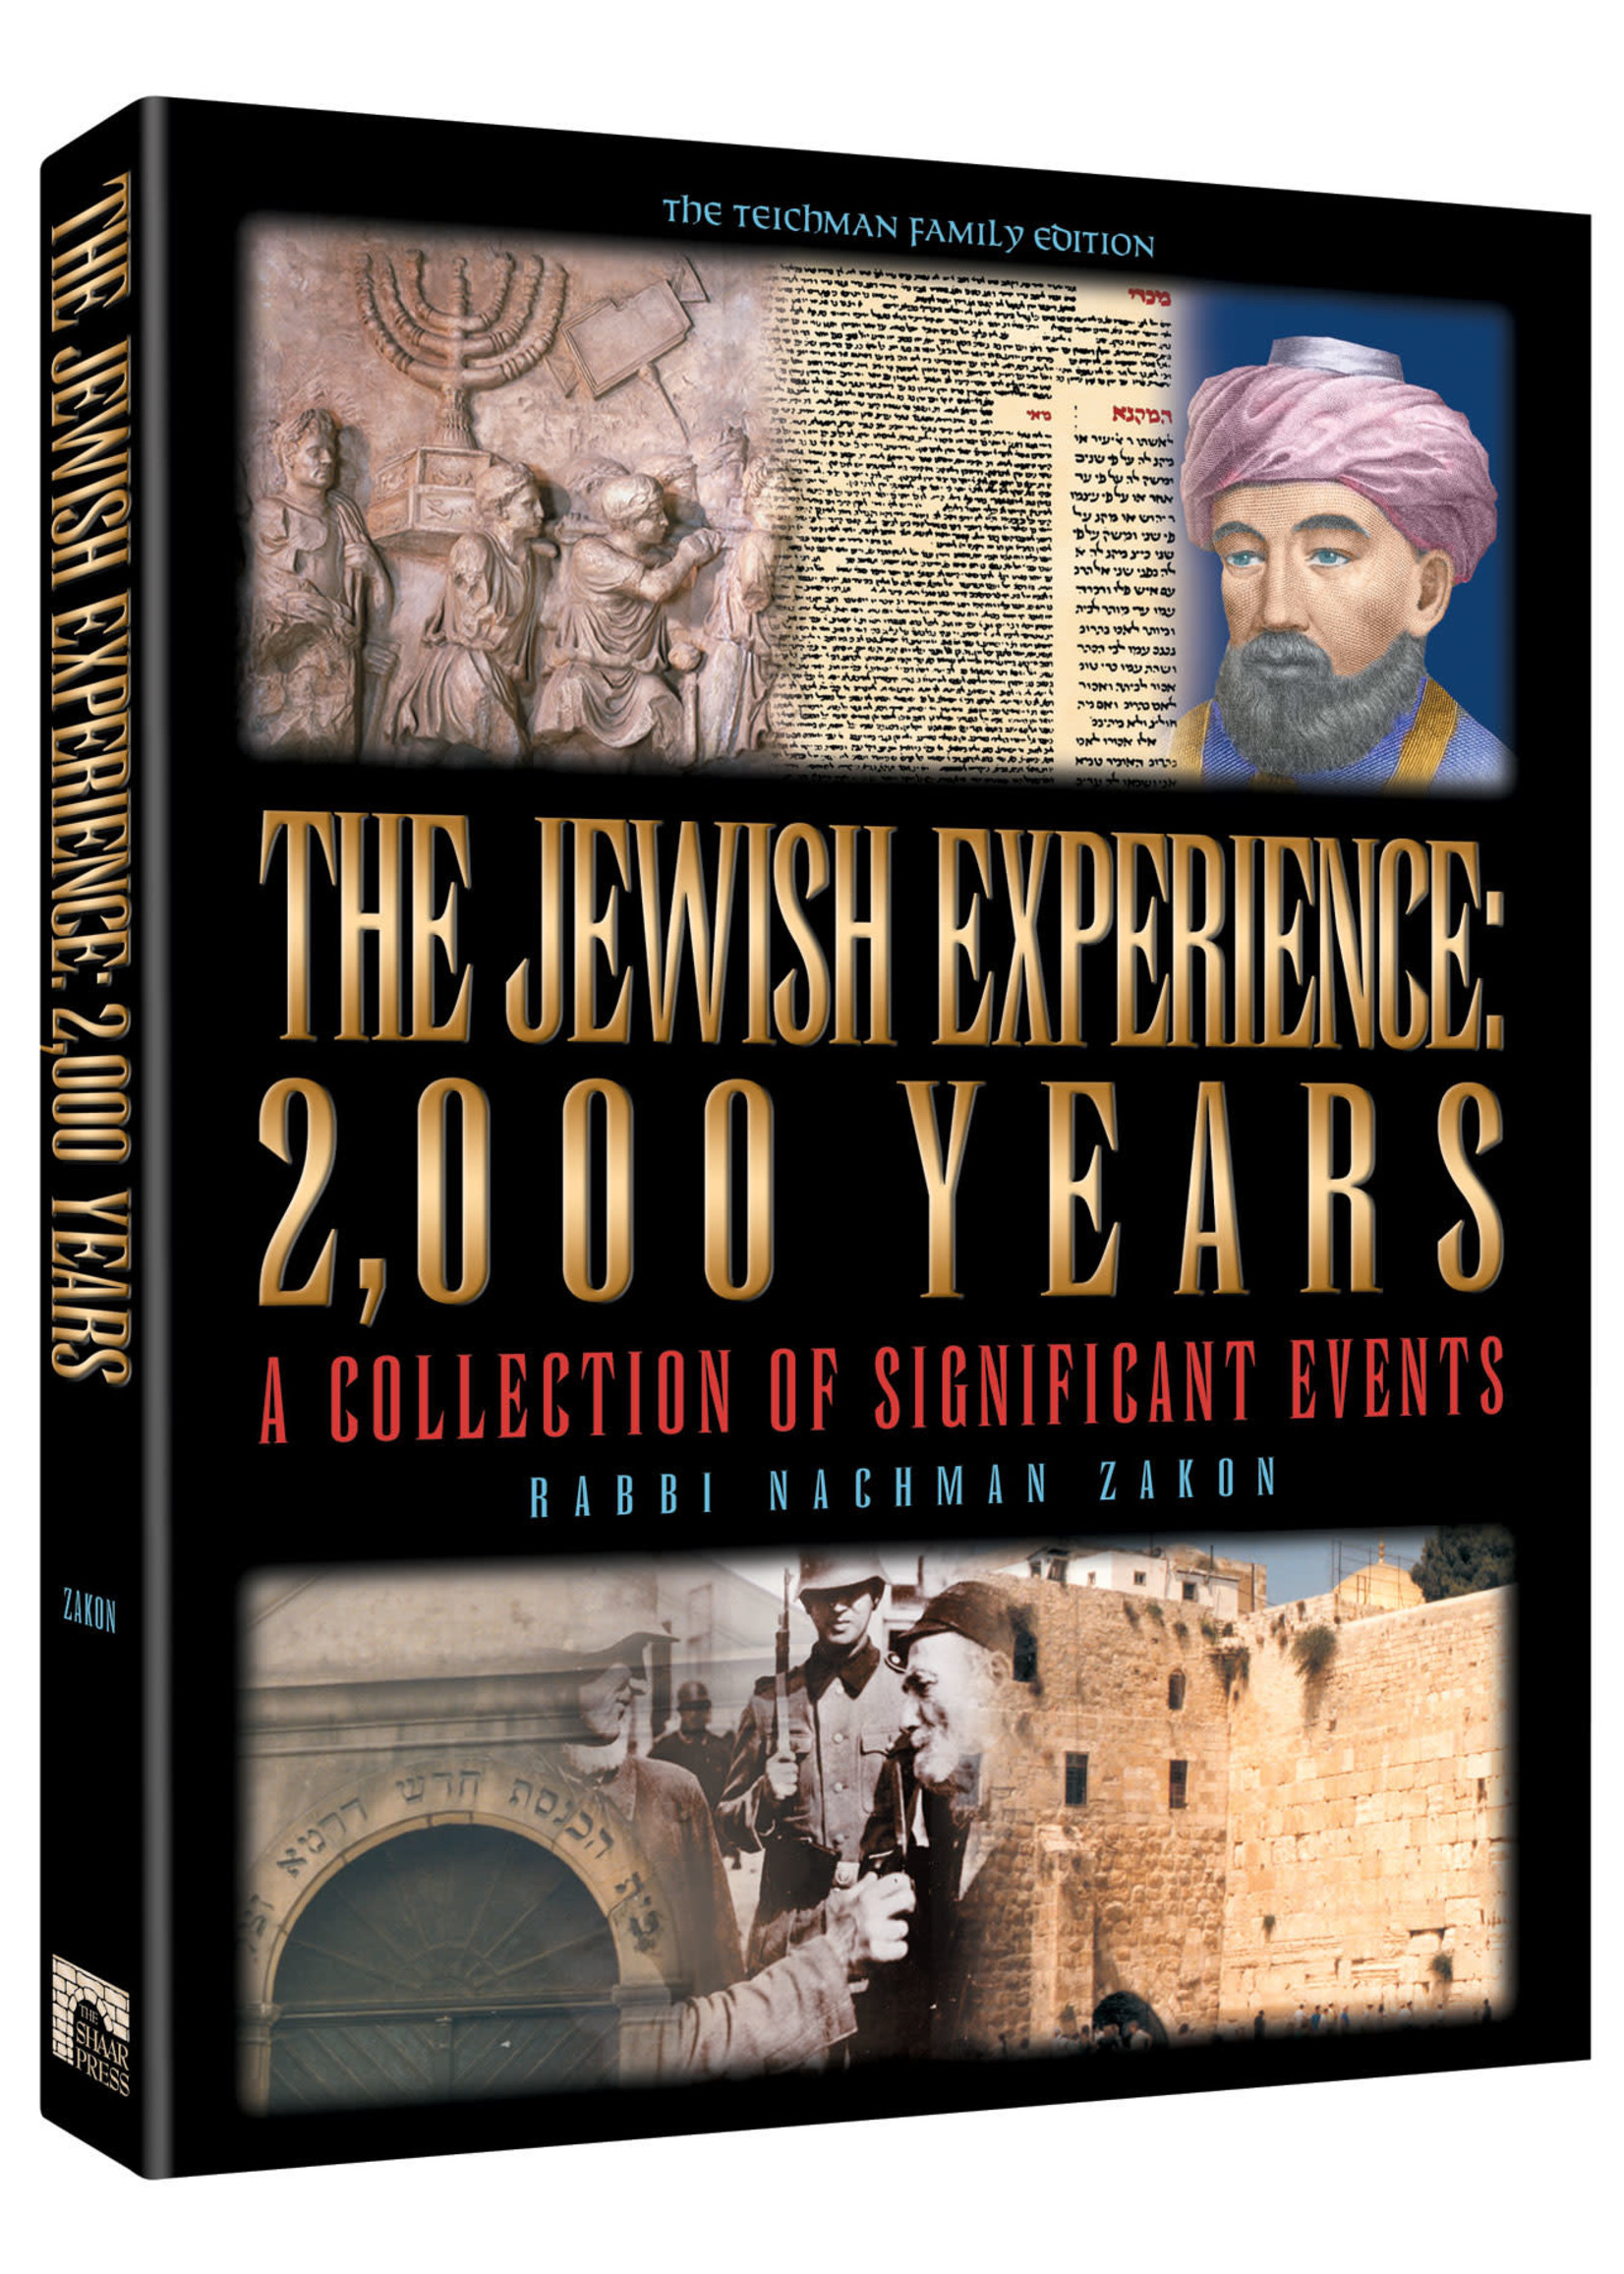 THE JEWISH EXPERIENCE 2,000